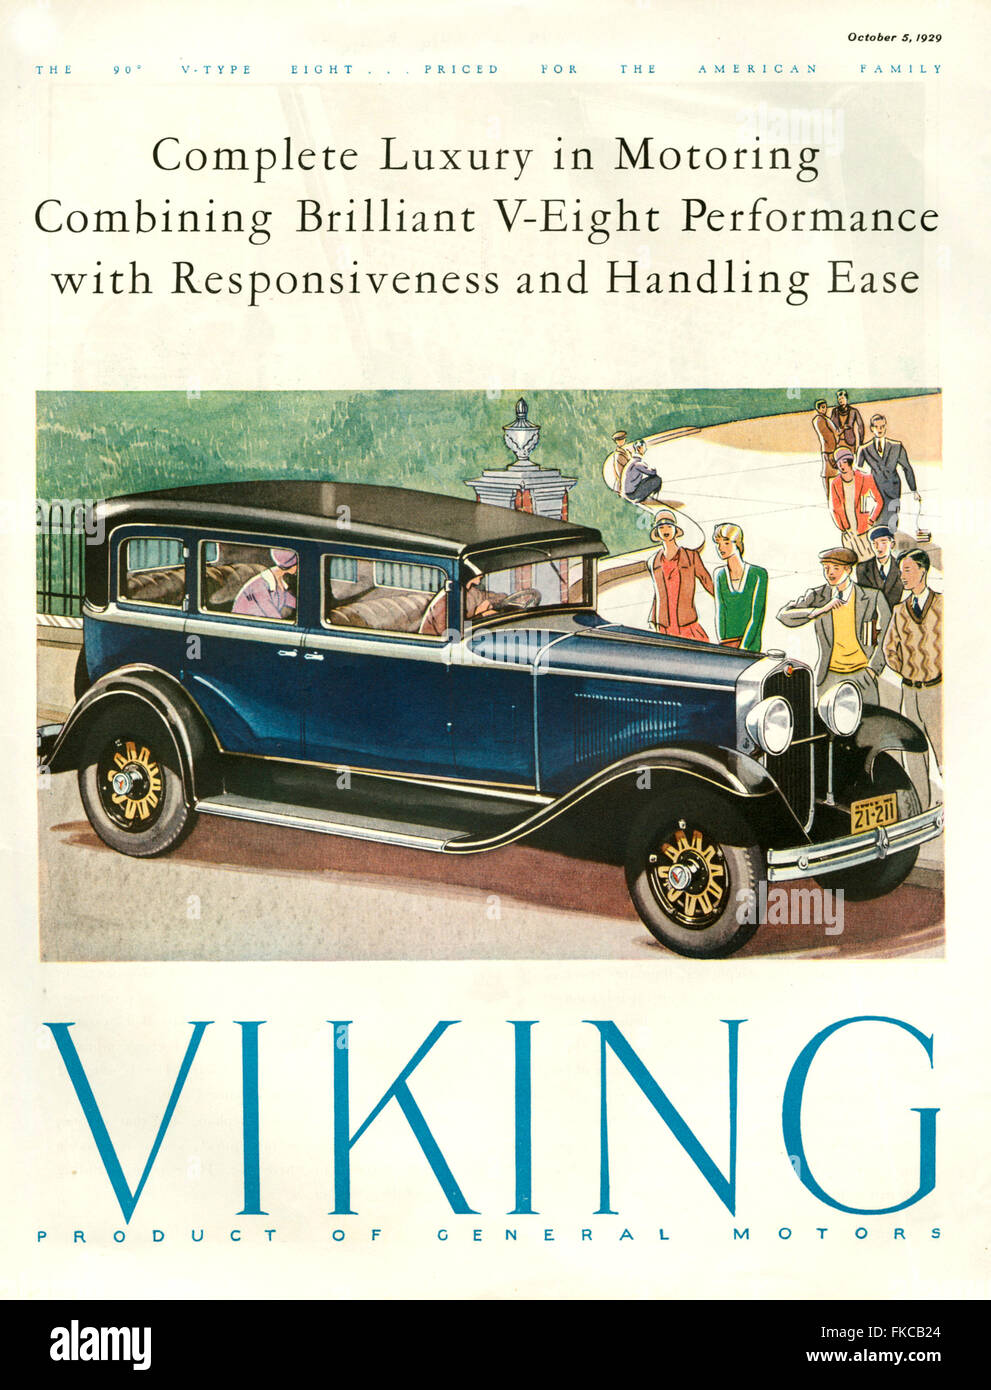 1920er Jahren USA Viking Magazin Anzeige Stockfoto